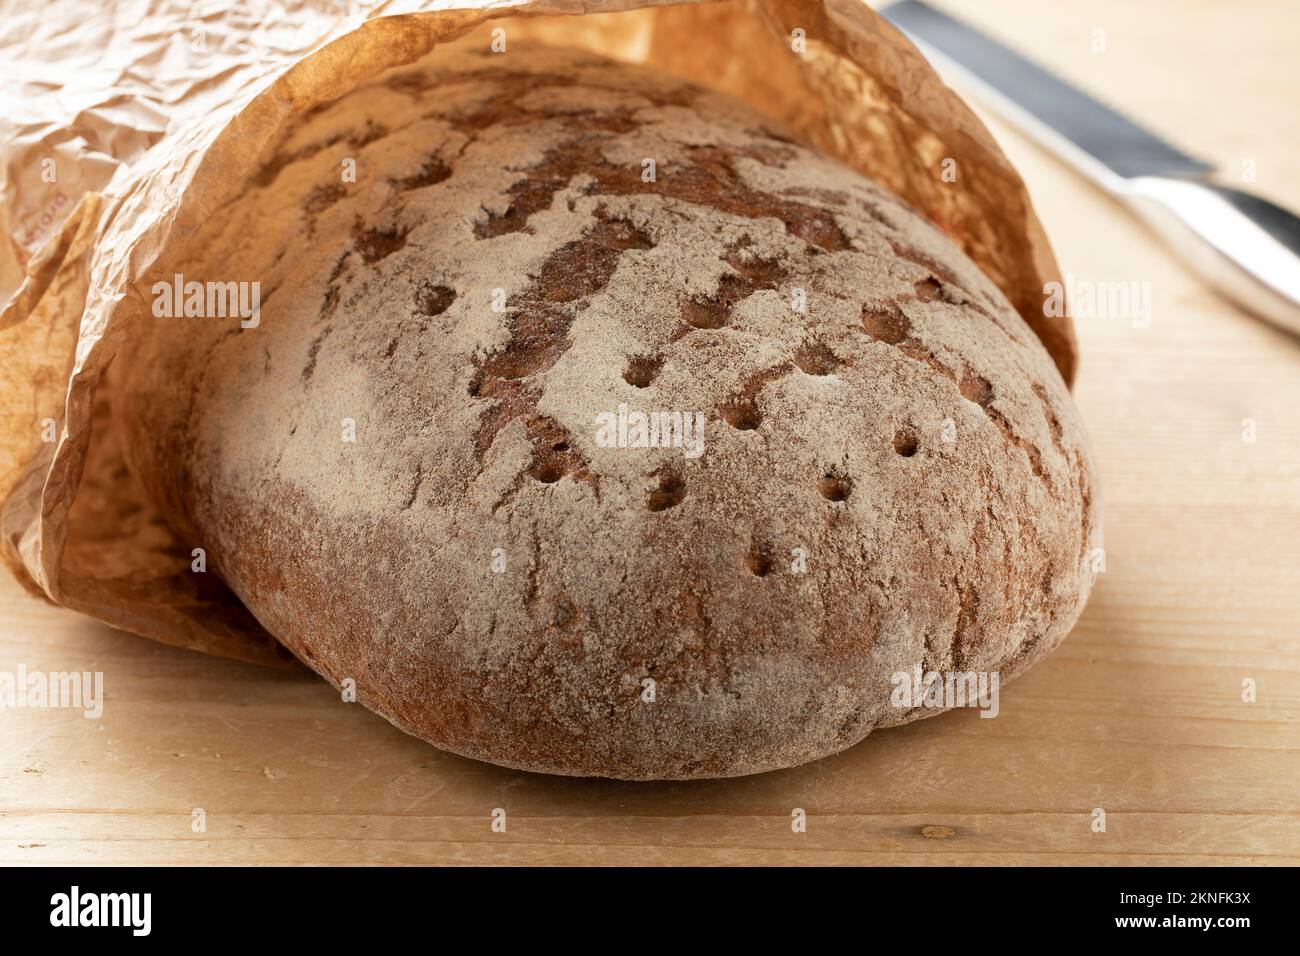 Pan de masa madre alemana entero en una bolsa de papel de cerca Foto de stock